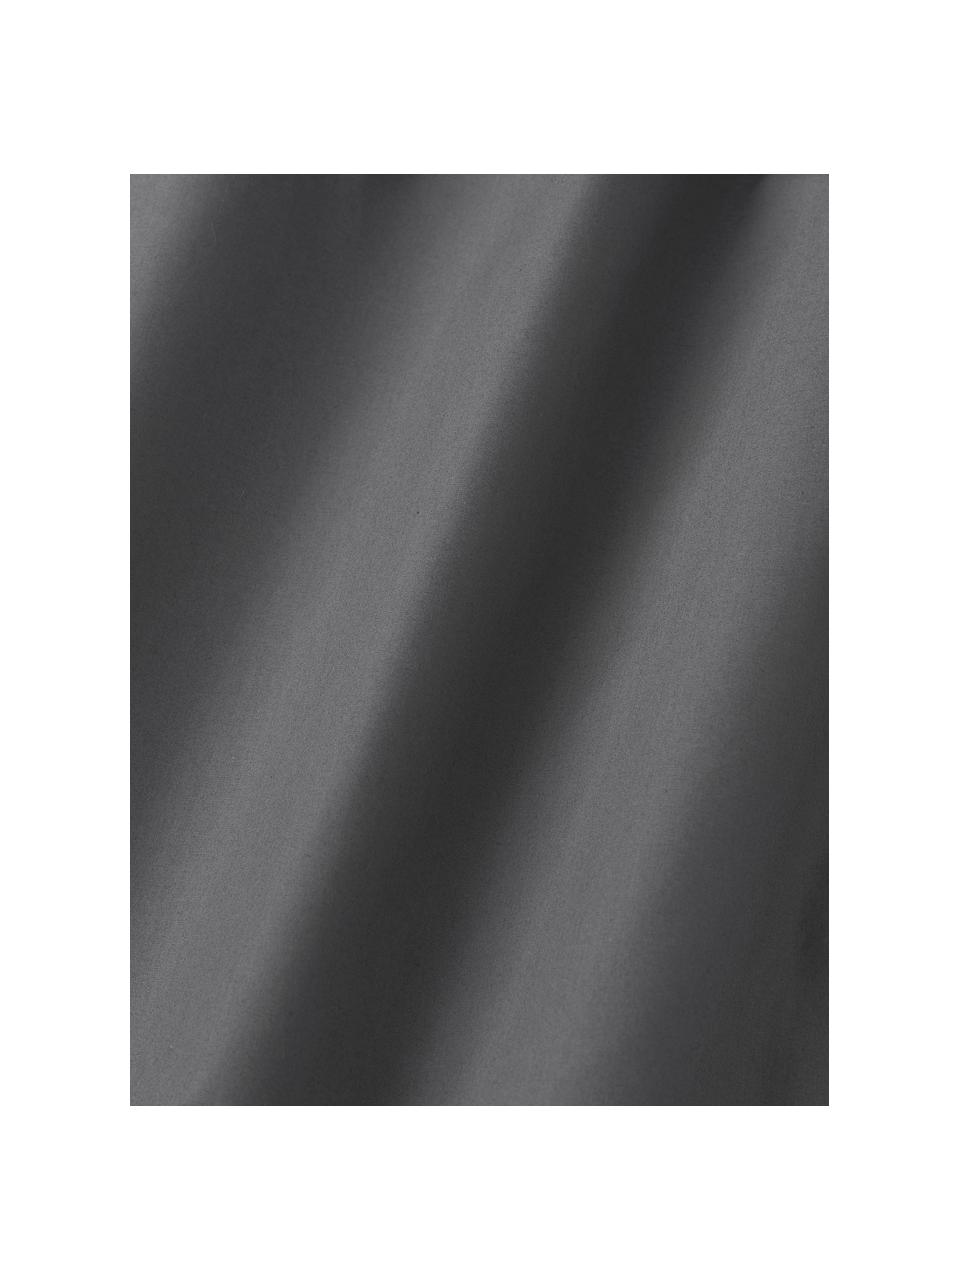 Sábana bajera de percal Elsie, Gris antracita, Cama 180 cm (180 x 200 x 35 cm)